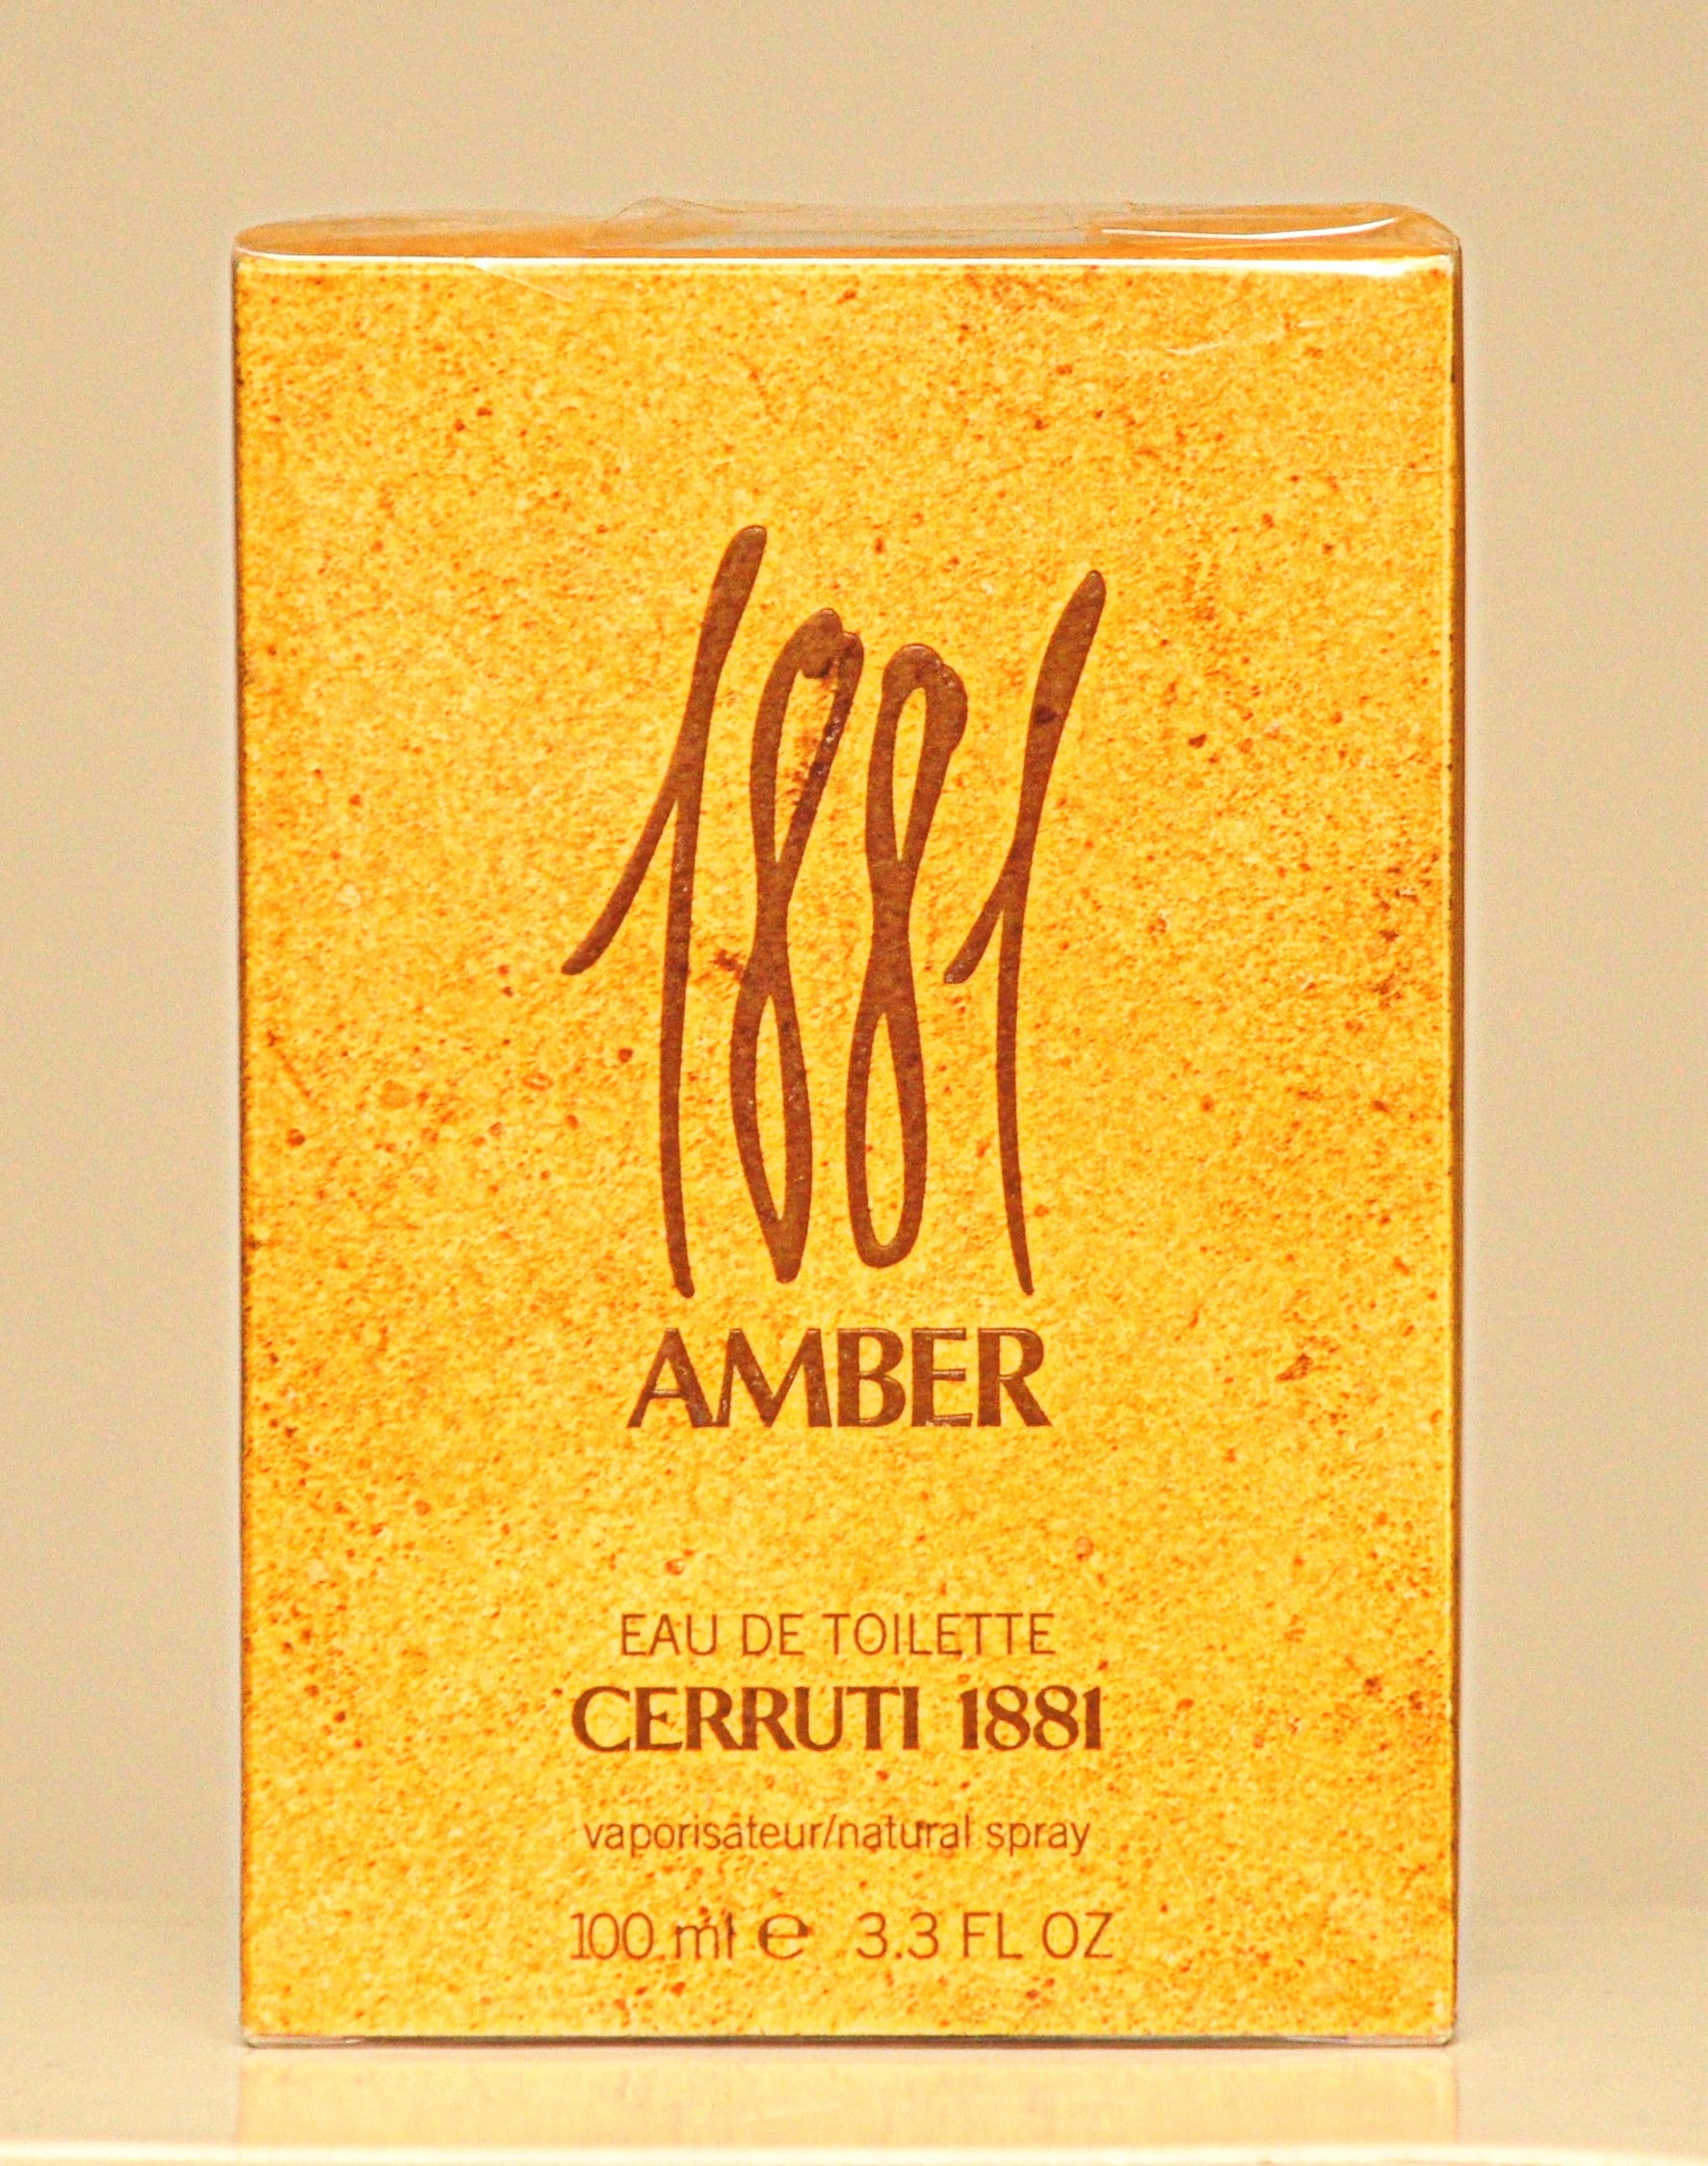 Cerruti 1881 Amber Pour Homme Eau De Toilette Edt 100Ml Spray Parfüm Mann Rare Vintage Neu Versiegelt von YourVintagePerfume